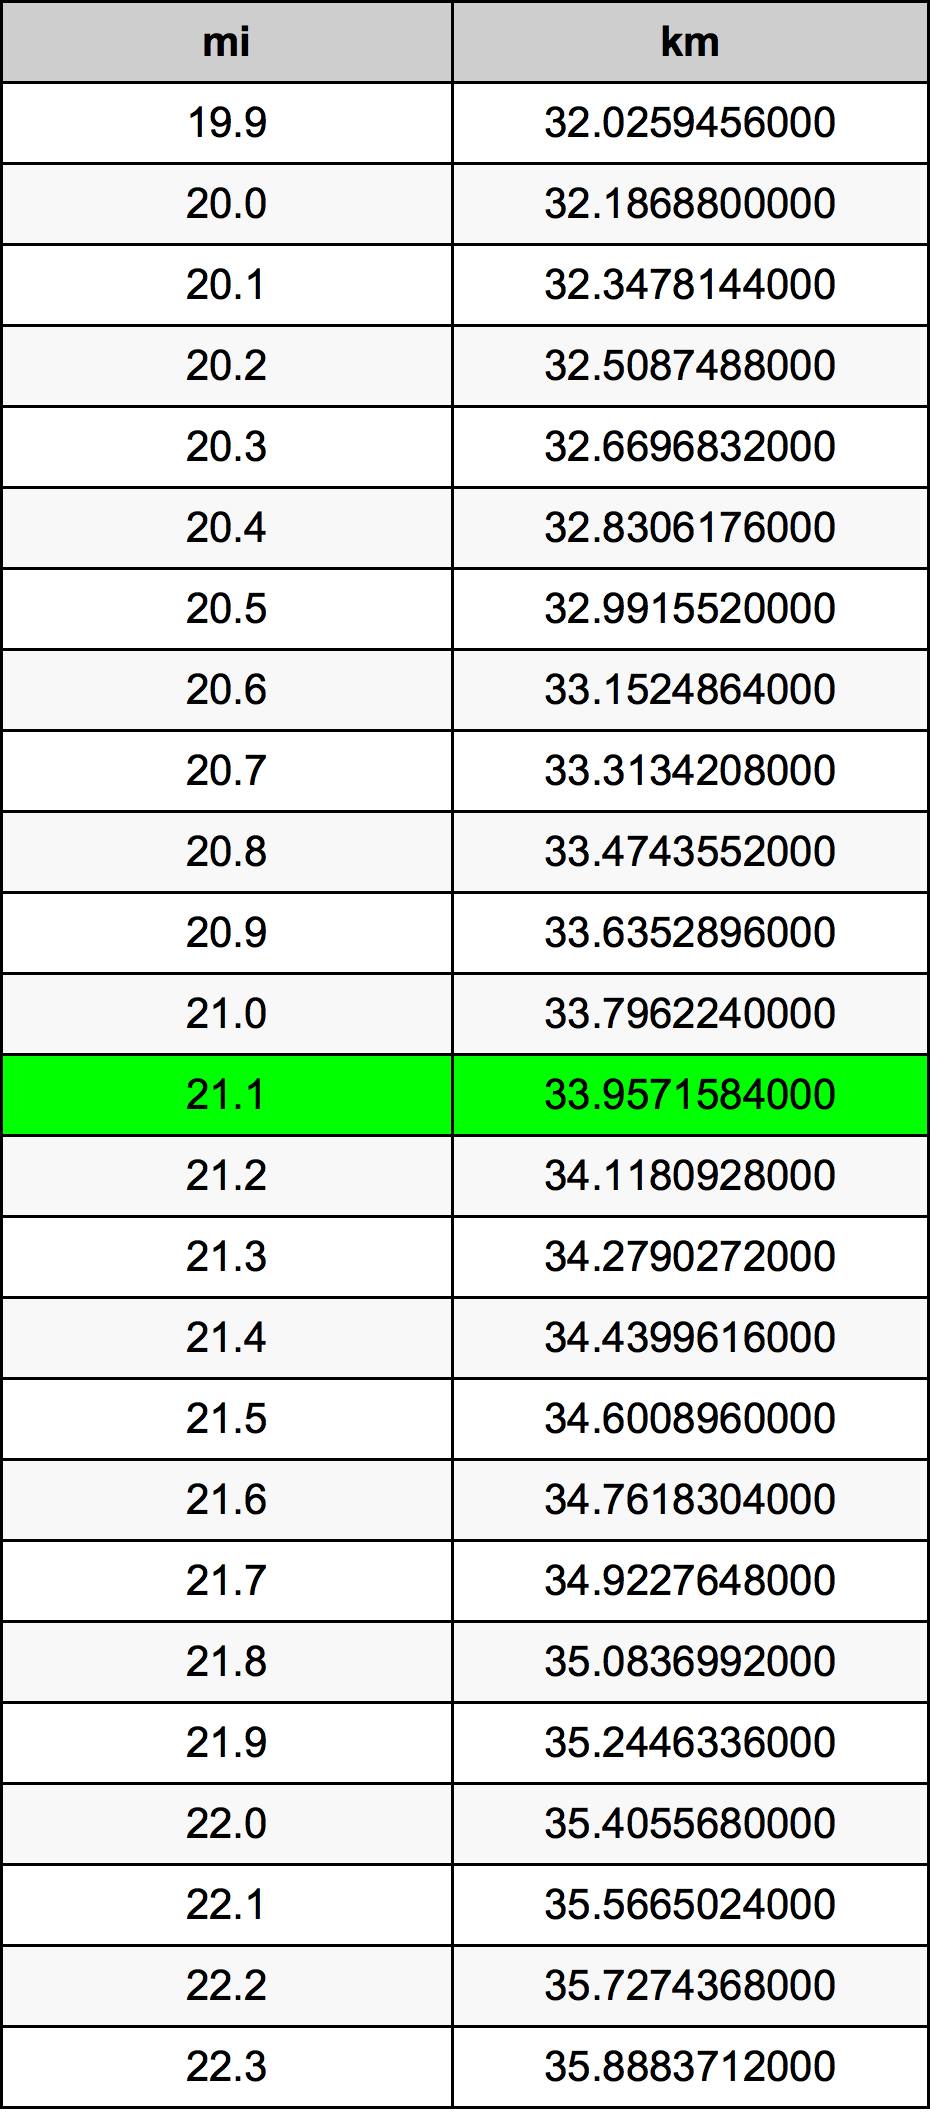 21.1 mil konversi tabel